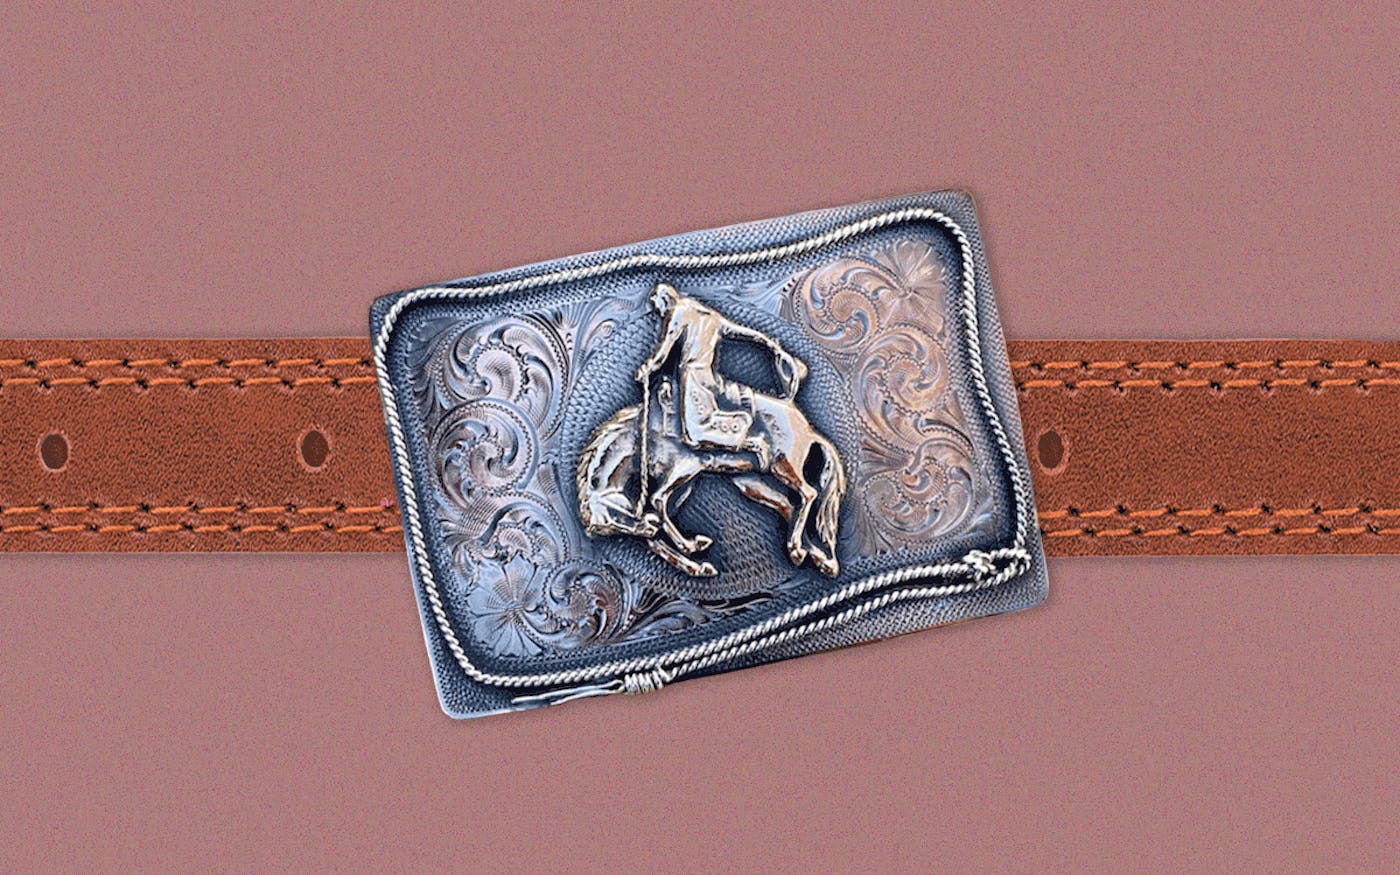 Cowboy Belt Buckle